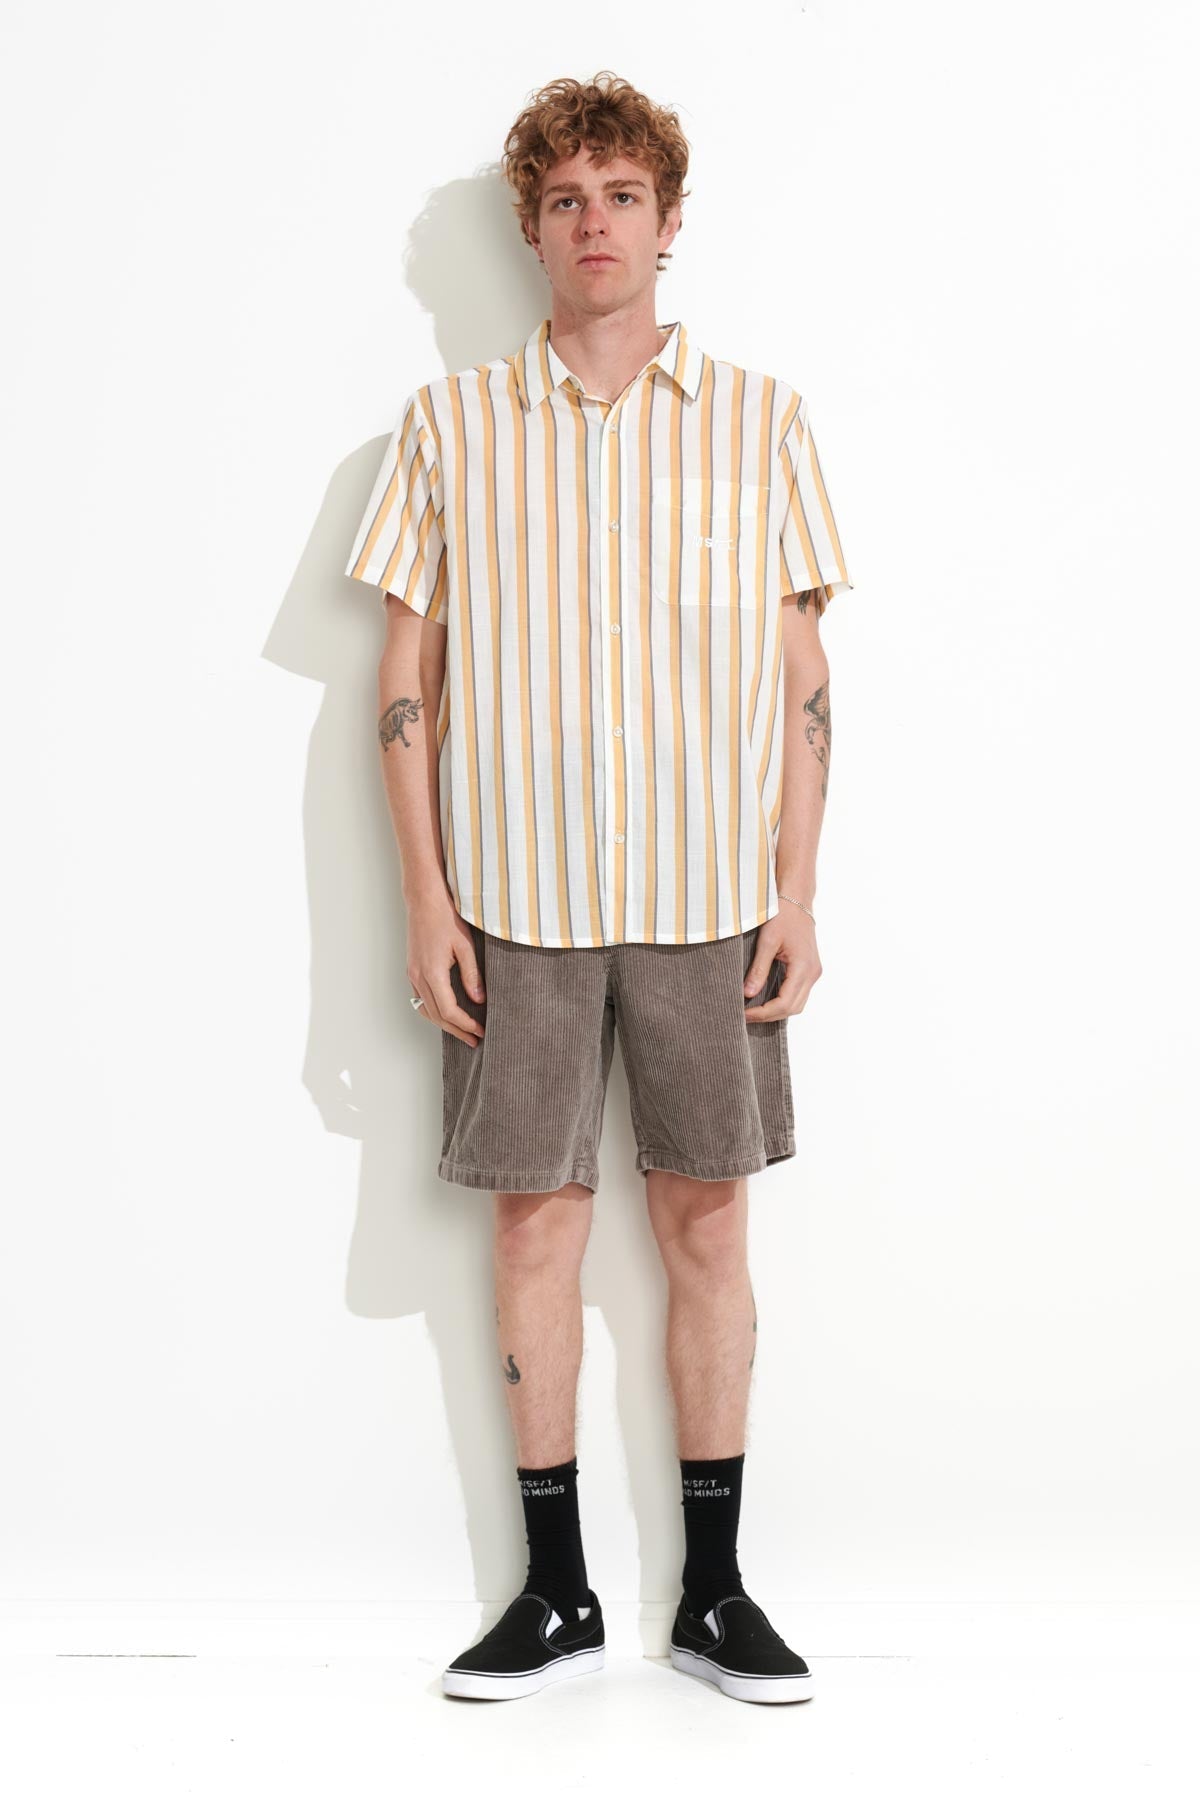 Misfit Shapes - Primary Vacation SS Shirt - Orange Stripe